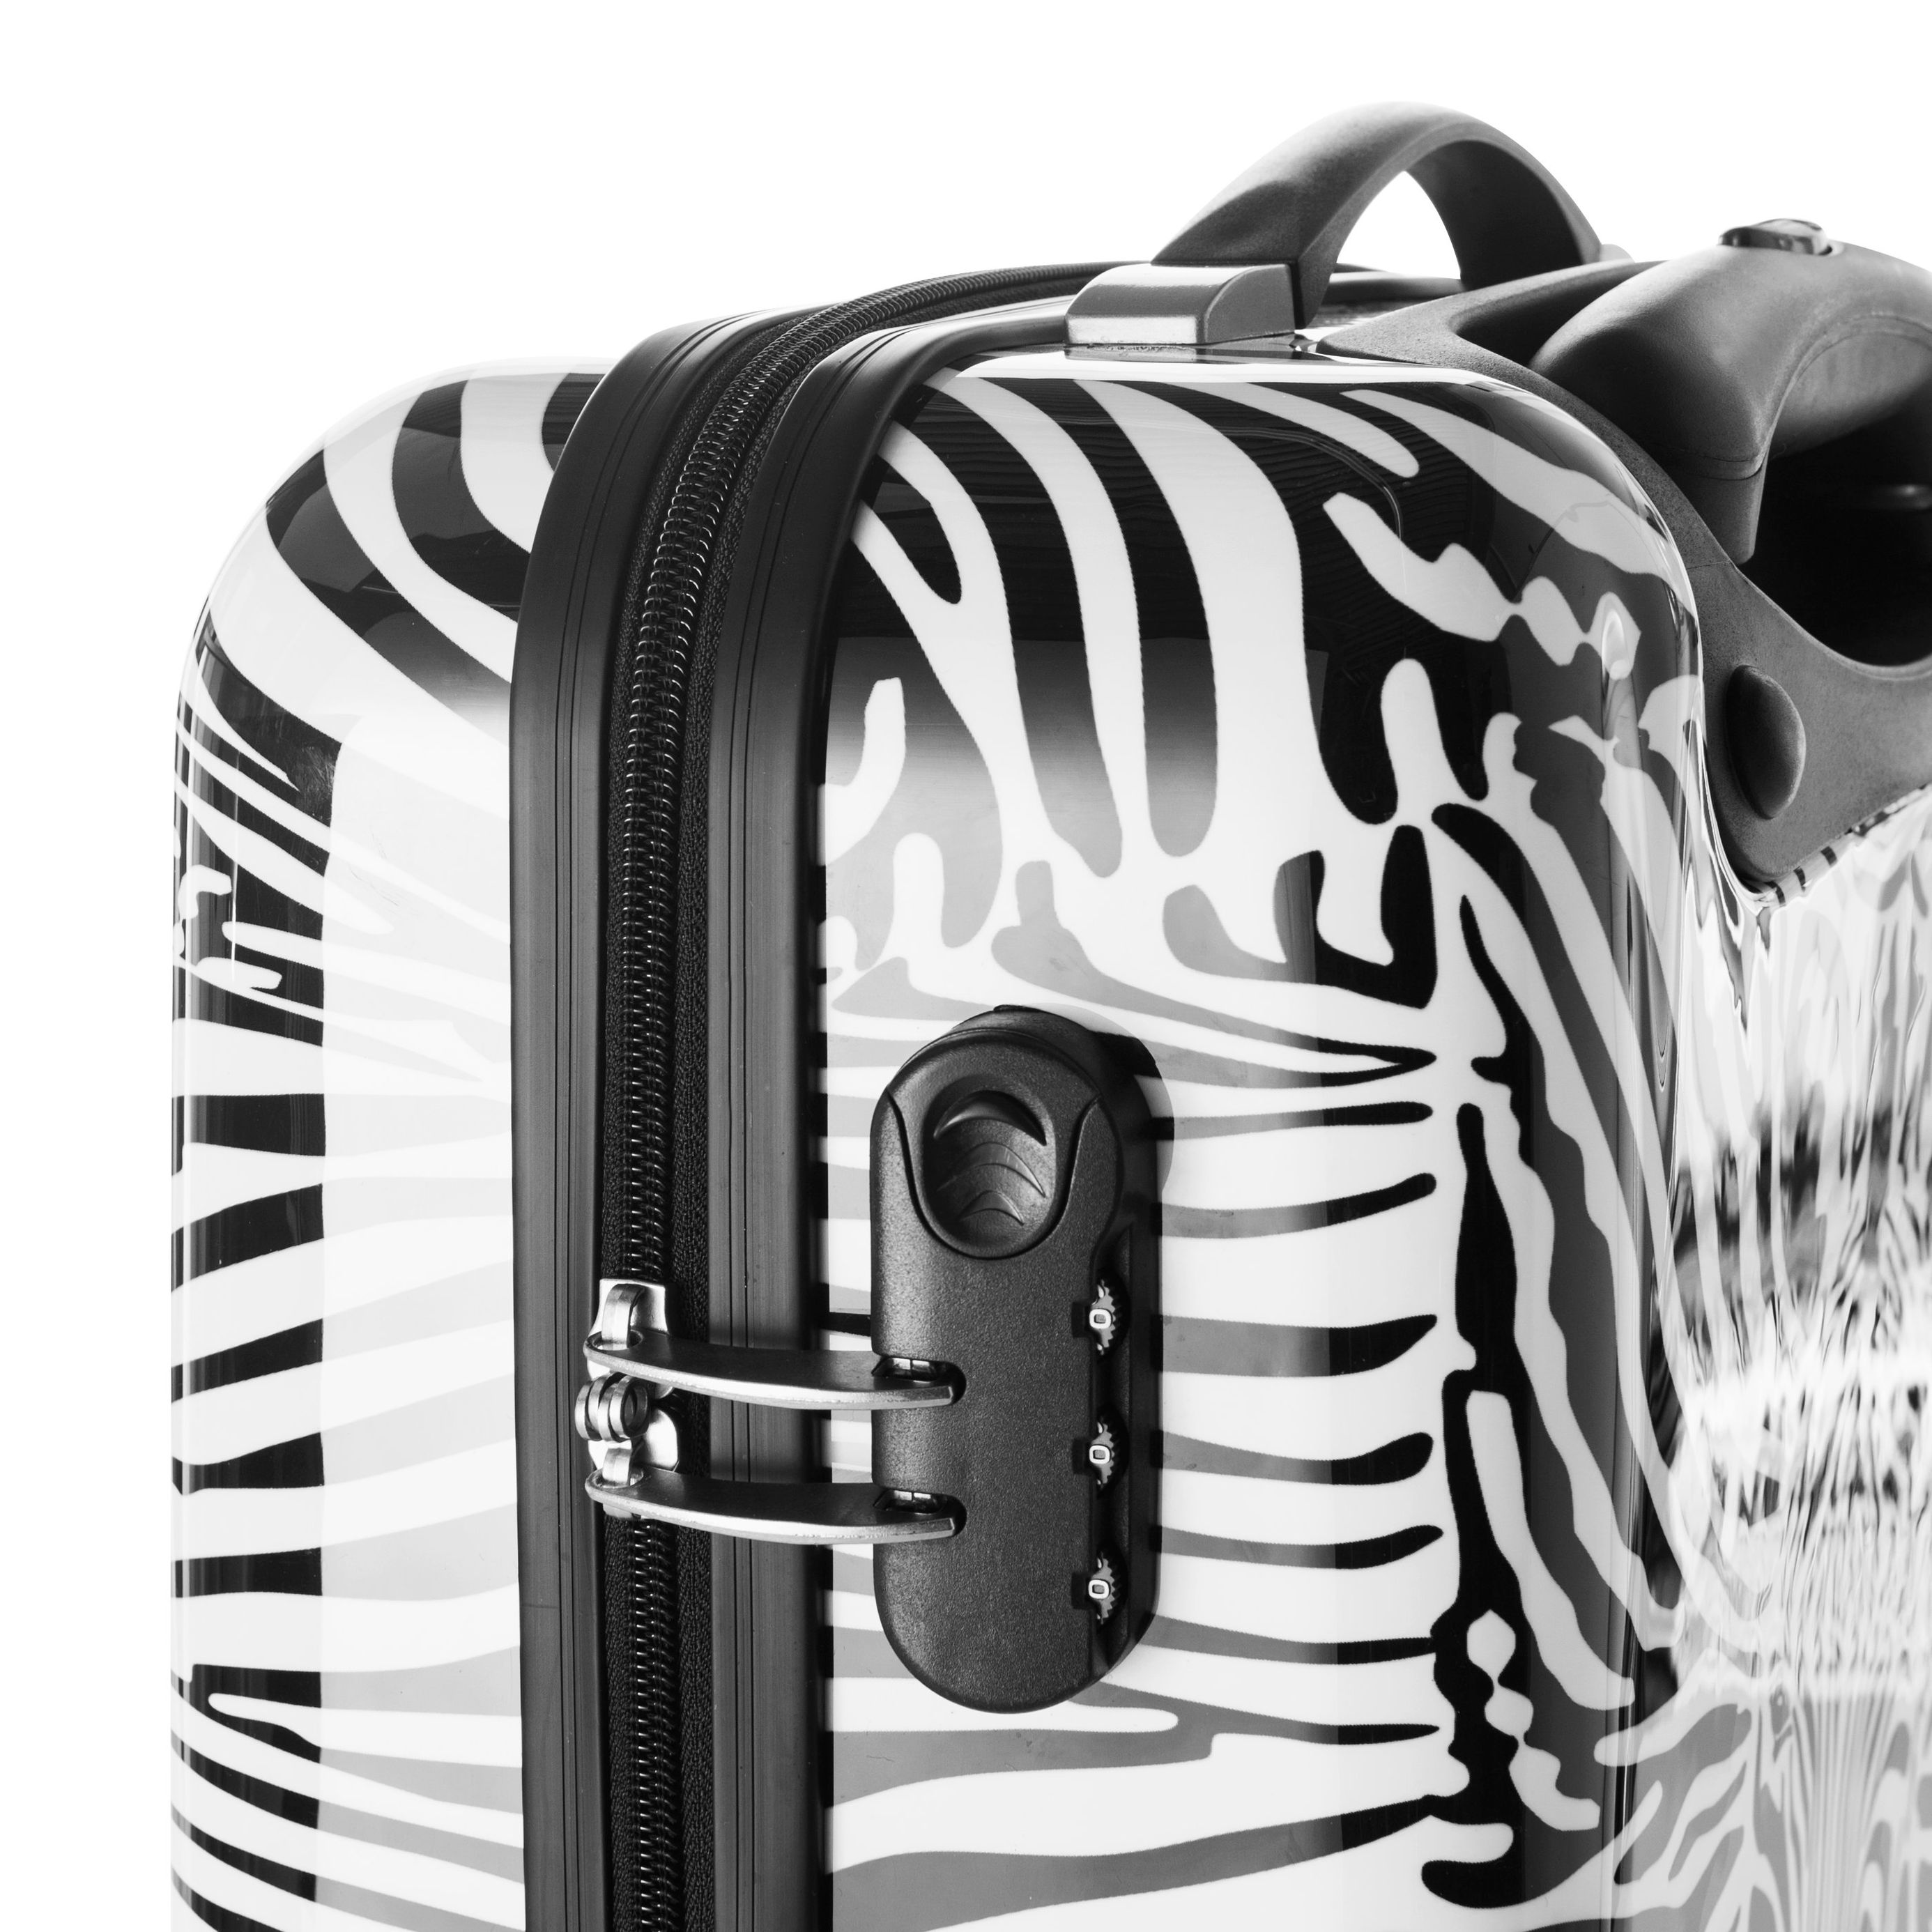 Kofferset Wildlife Zebra, 3-tlg. jetzt bei Weltbild.de bestellen